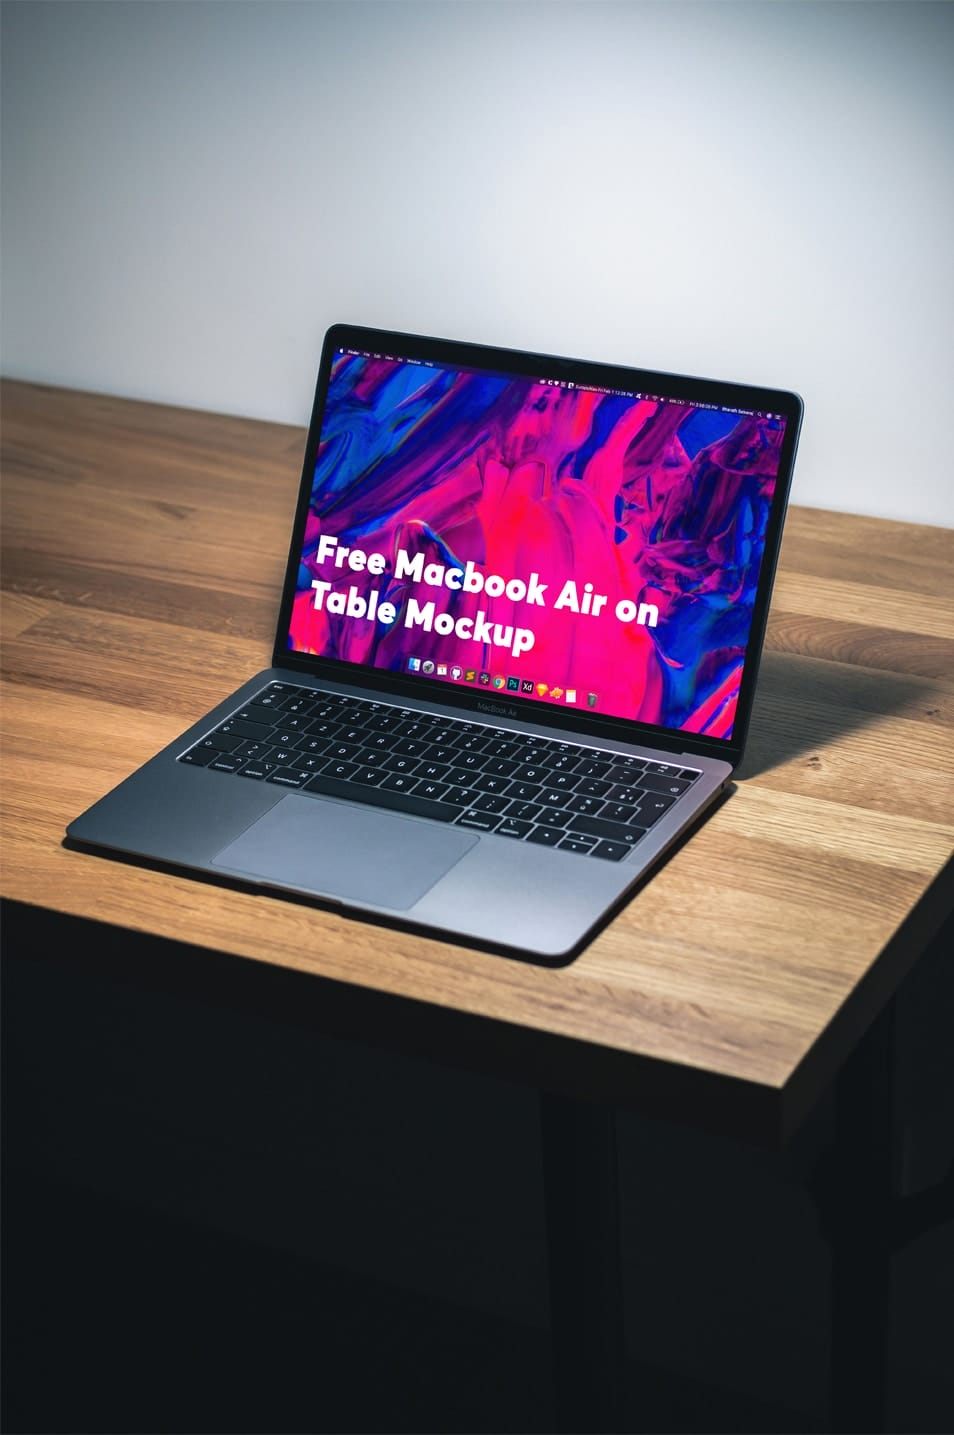 Free Macbook Air on Table Mockup